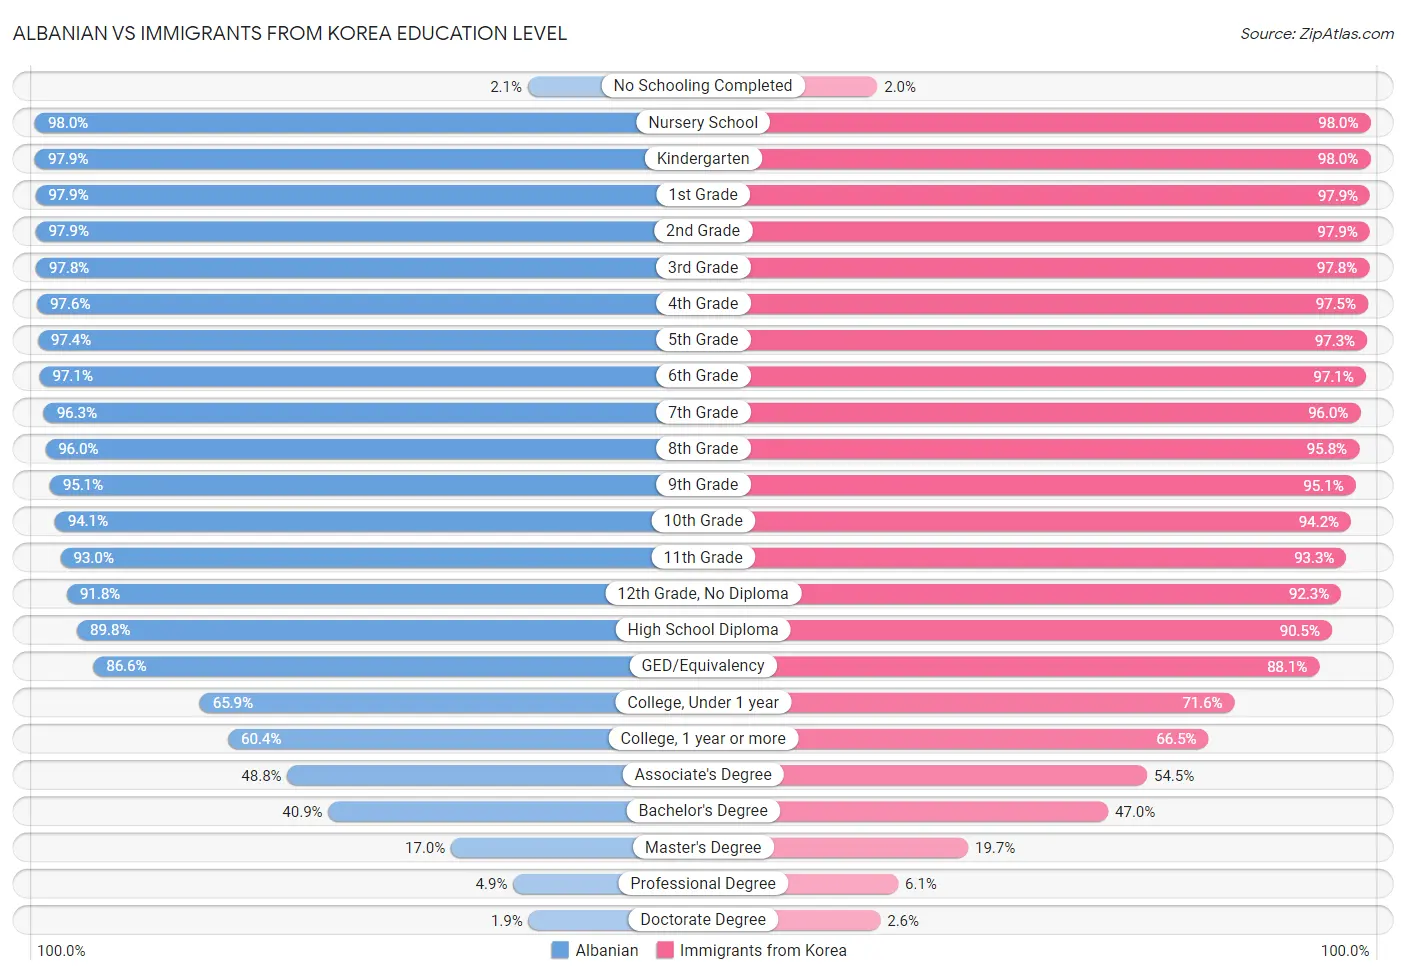 Albanian vs Immigrants from Korea Education Level